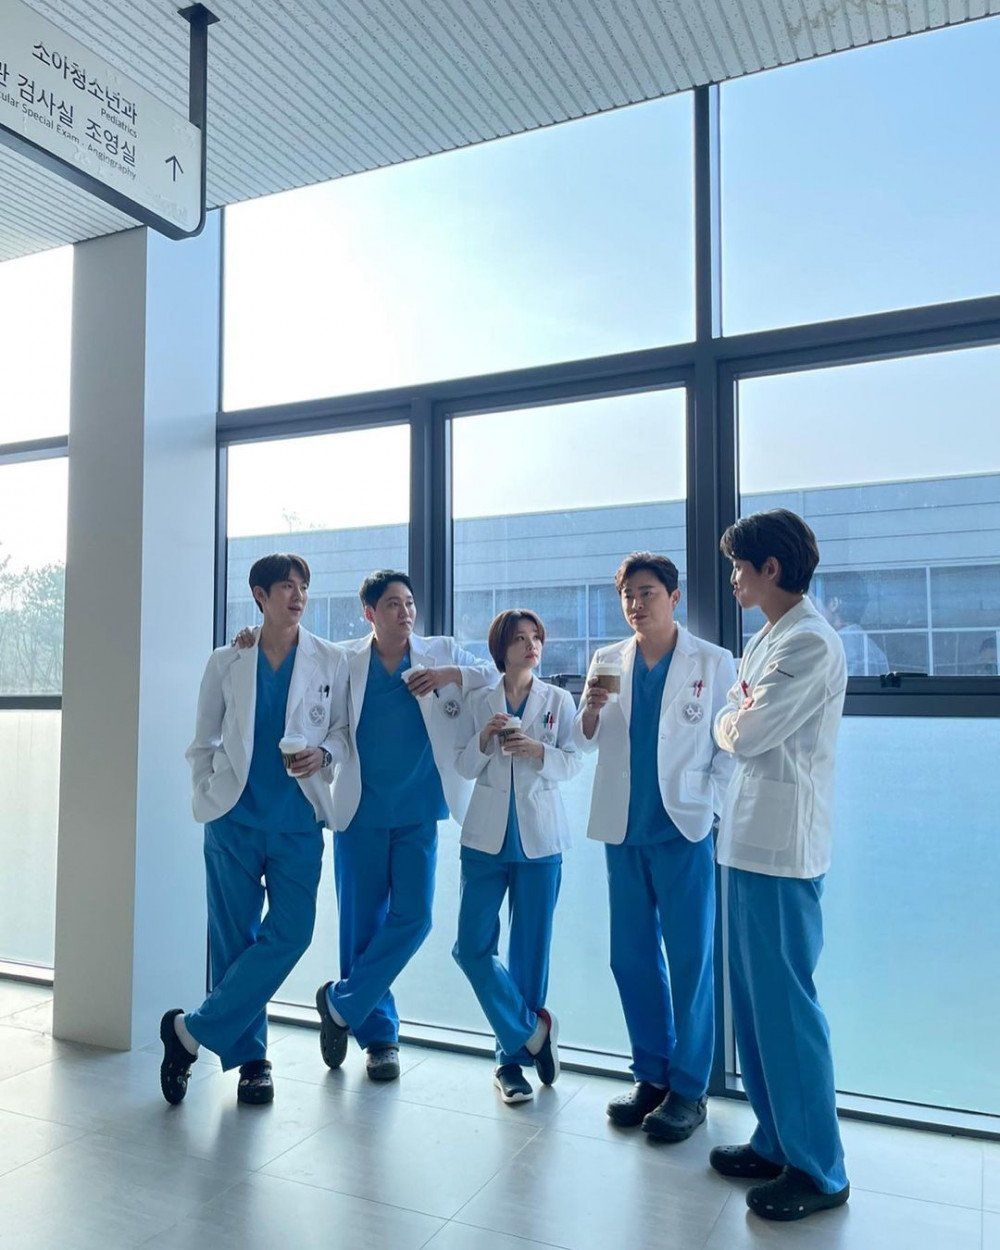 Pada Valentine kemarin, Jung Kyung Ho pemeran Kim Jung Wan dalam drama Hospital Playlist tampak memposting foto grup bersama pemeran lain drama Hospital Playlist.